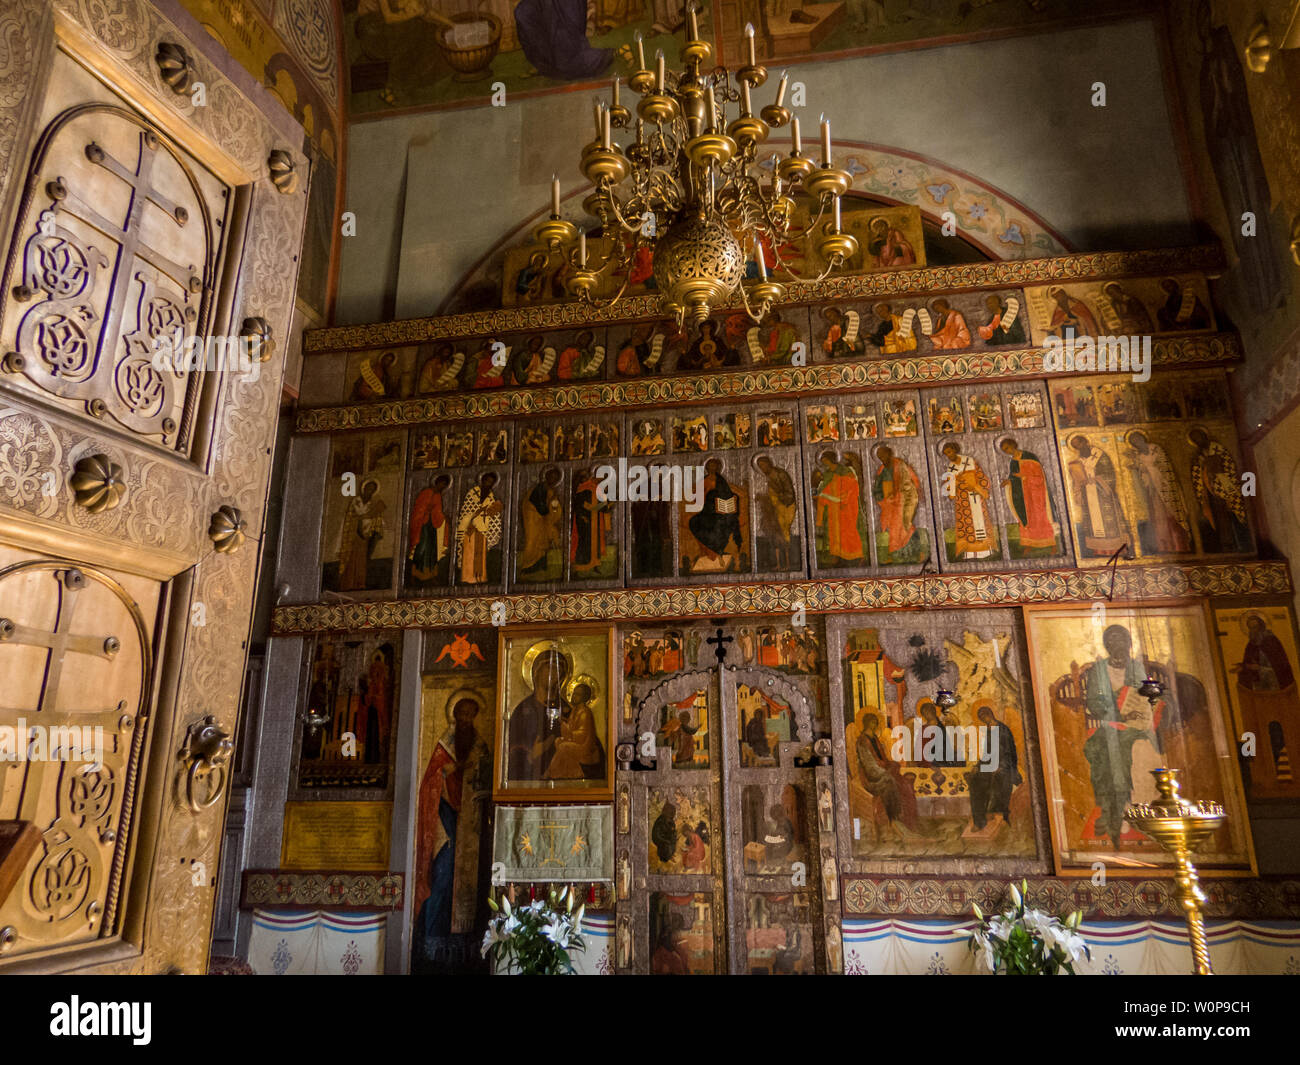 VELIKY NOVGOROD, RUSSIA - APRIL 24, 2019: View of the interior of Saint Sophia Cathedral in the Kremlin. Stock Photo